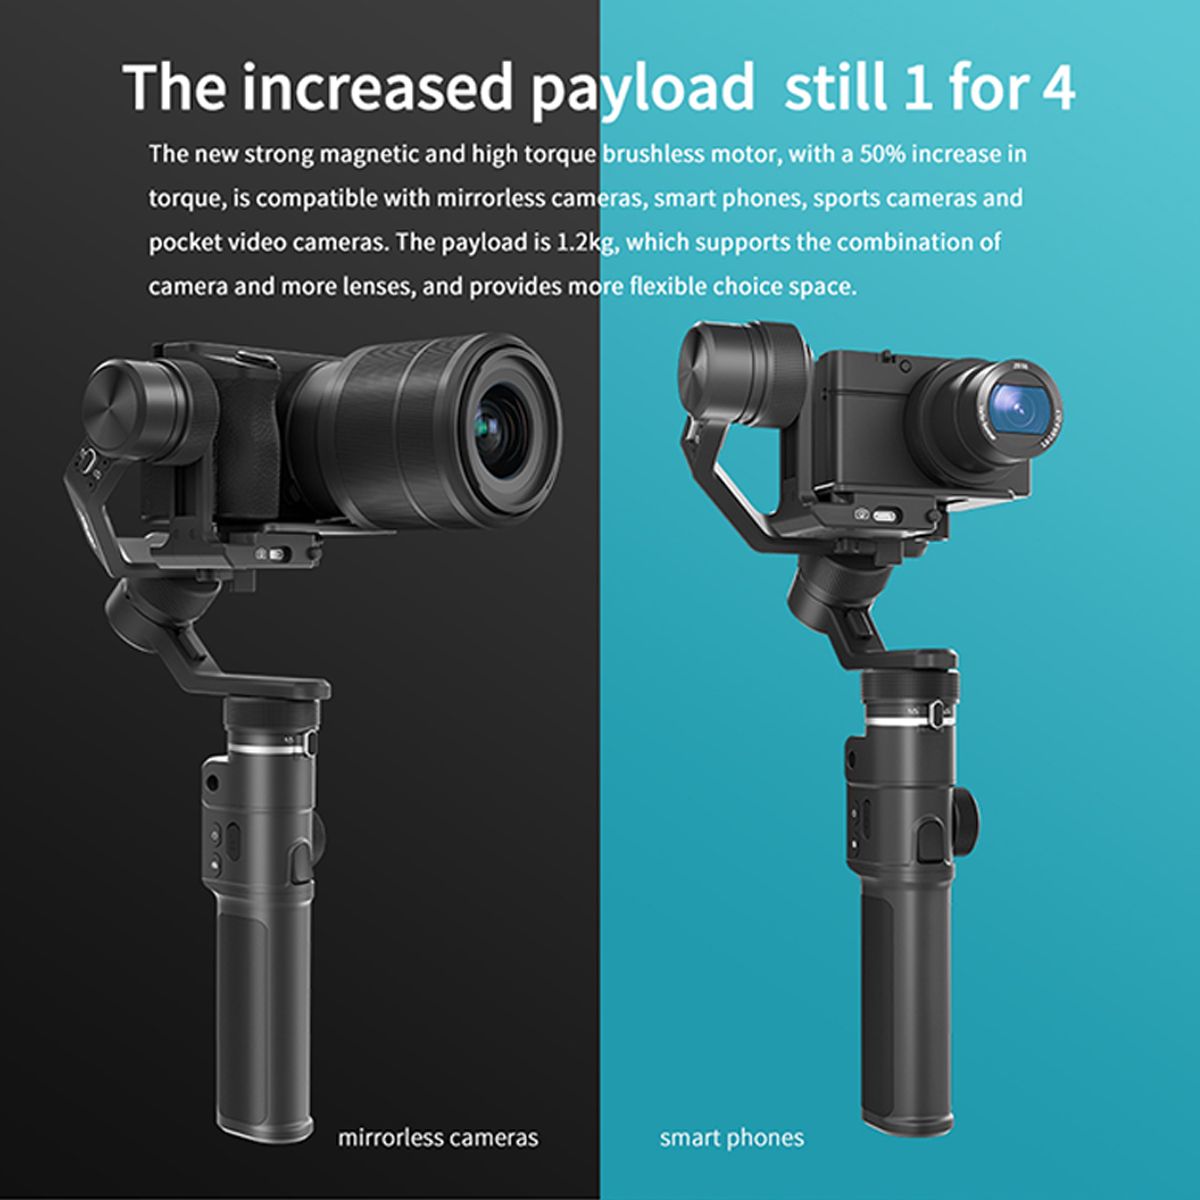 G6-Max-Handheld-Gimbal-Stabilizer-for-Mirrorless-Camera-Pocket-Action-Sport-Camera-for-GoPro-Hero876-1721779